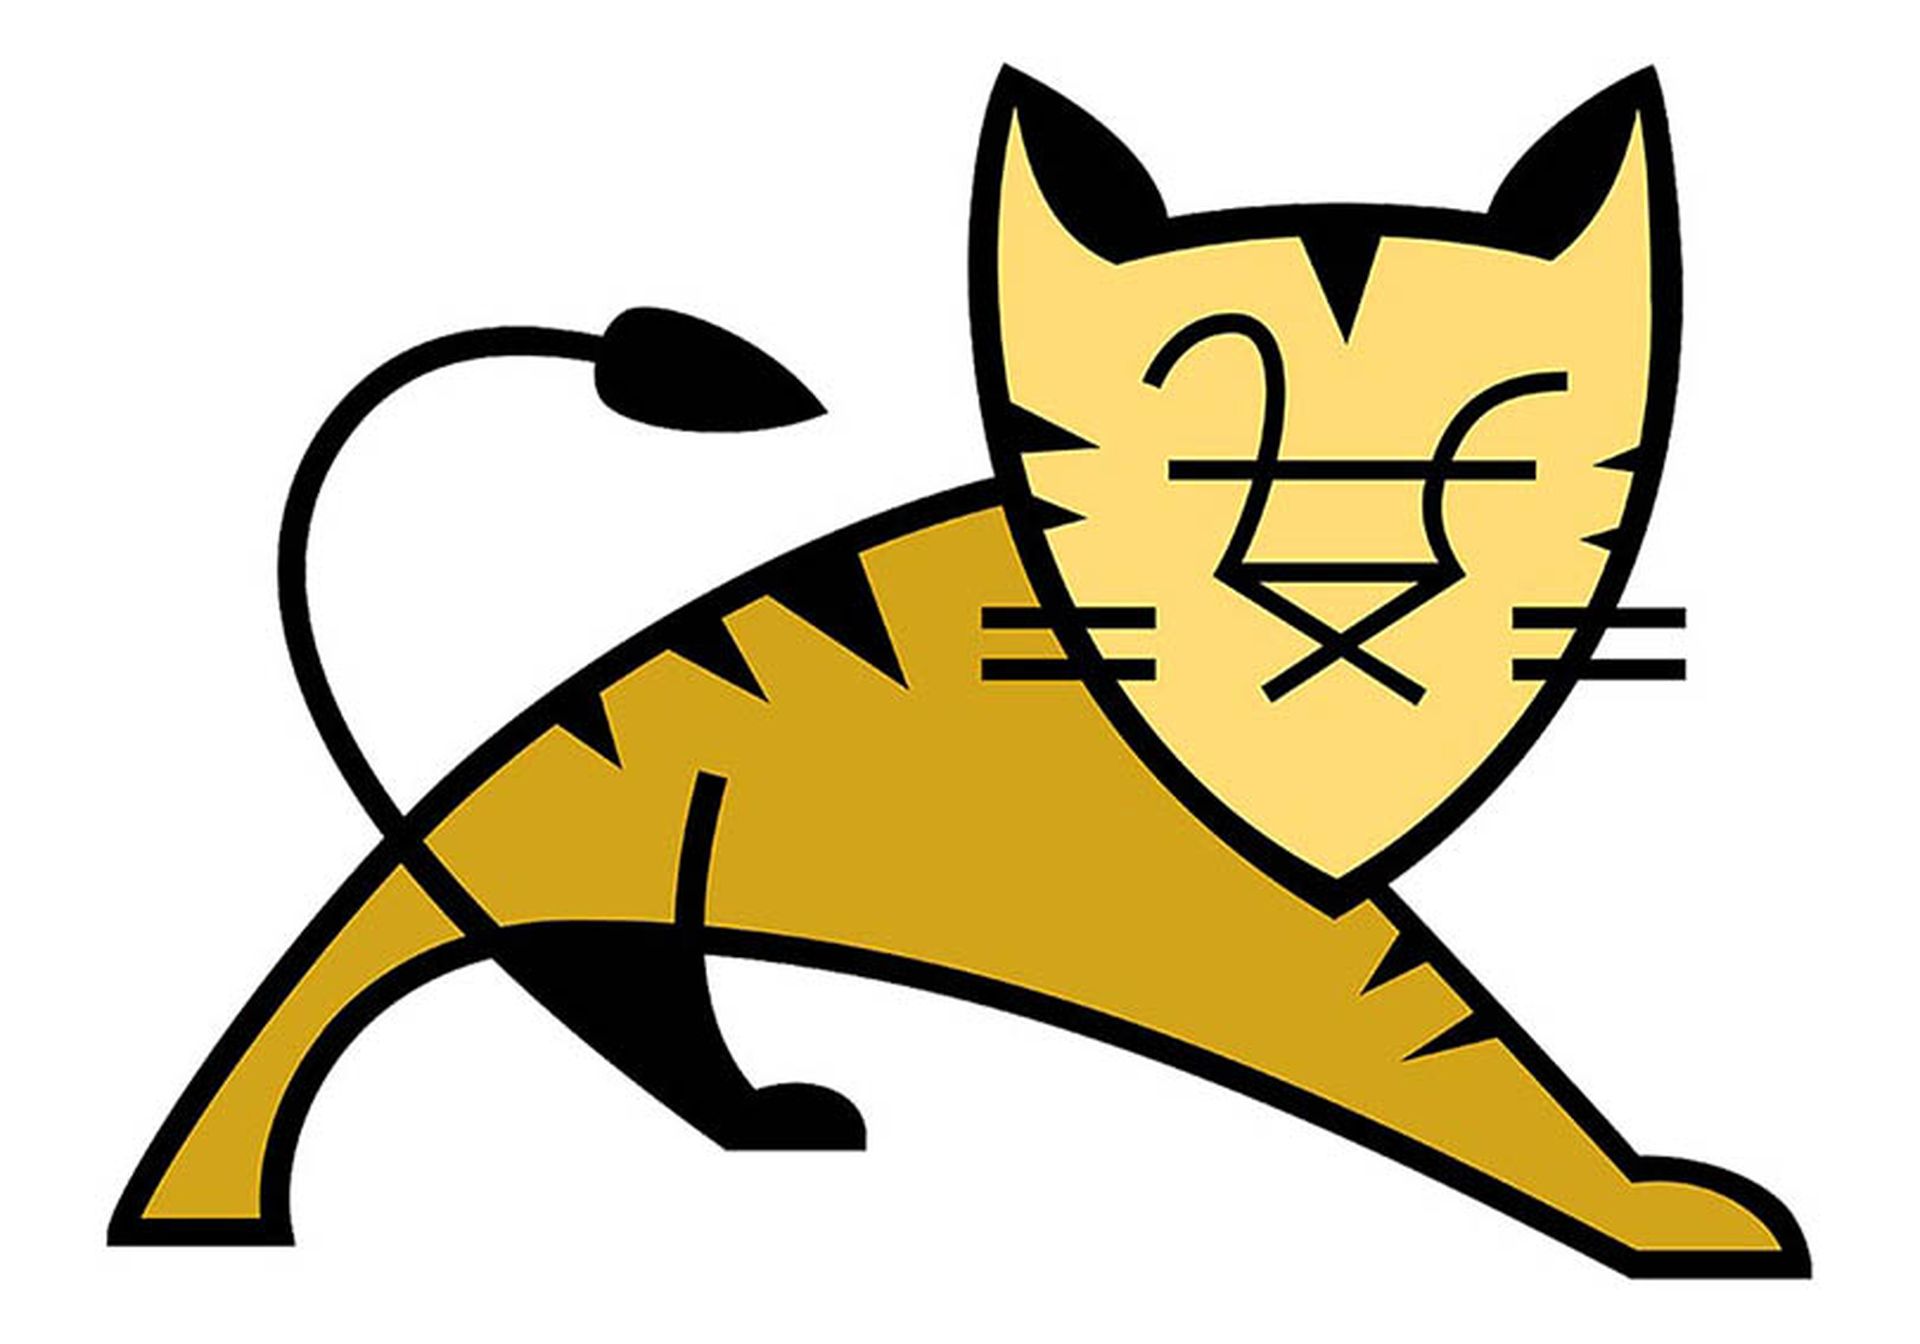 Unpatched Apache Tomcat servers spread Mirai botnet malware